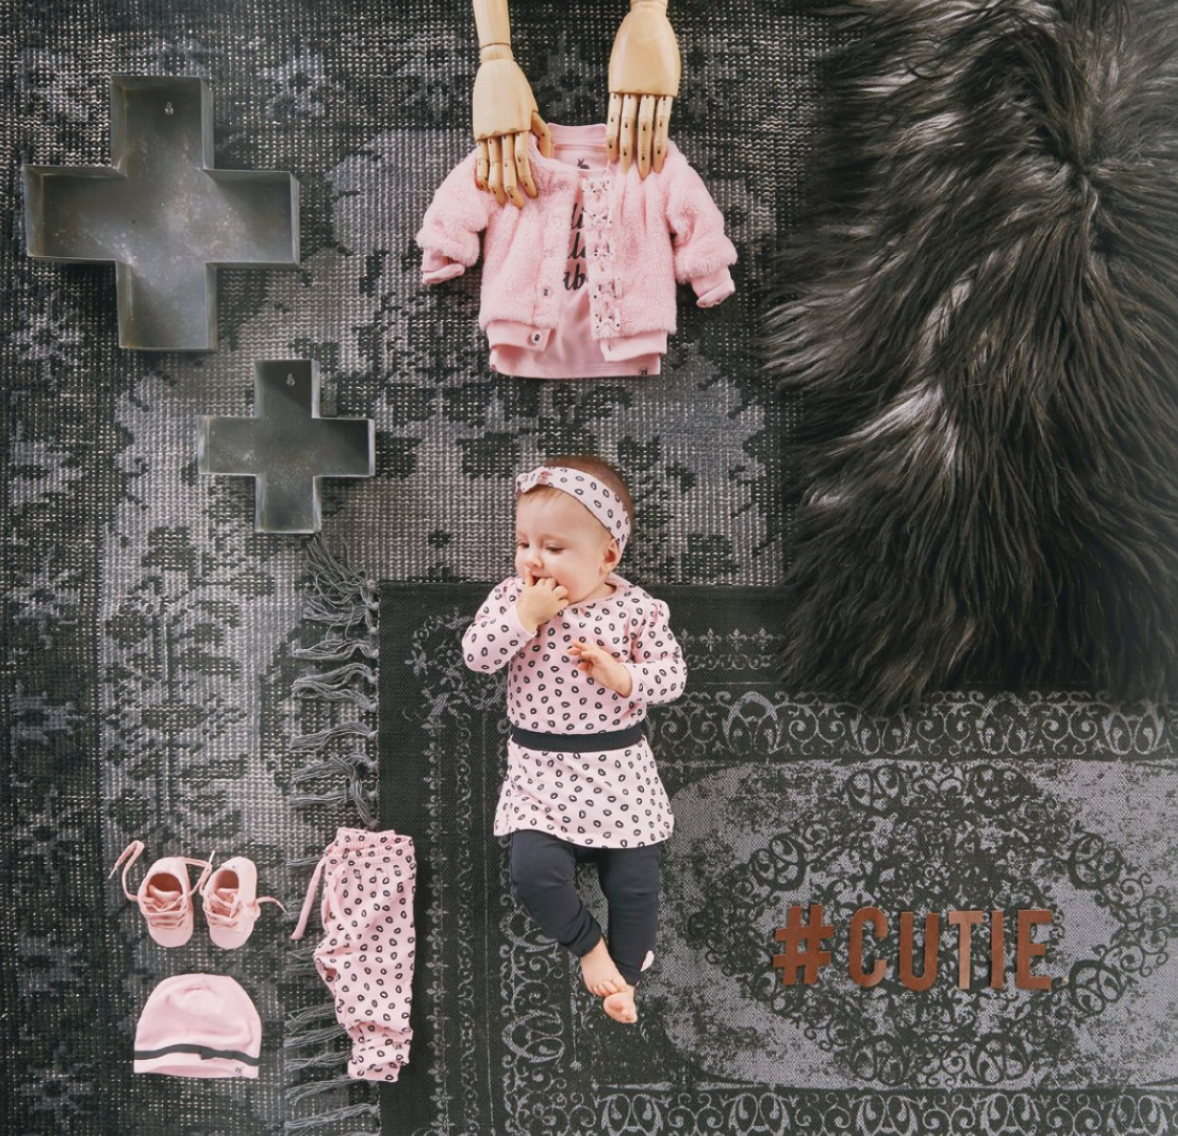 Lima Keelholte Gestaag Z8 Newborn collectie winter '17/'18 • Mommyhood